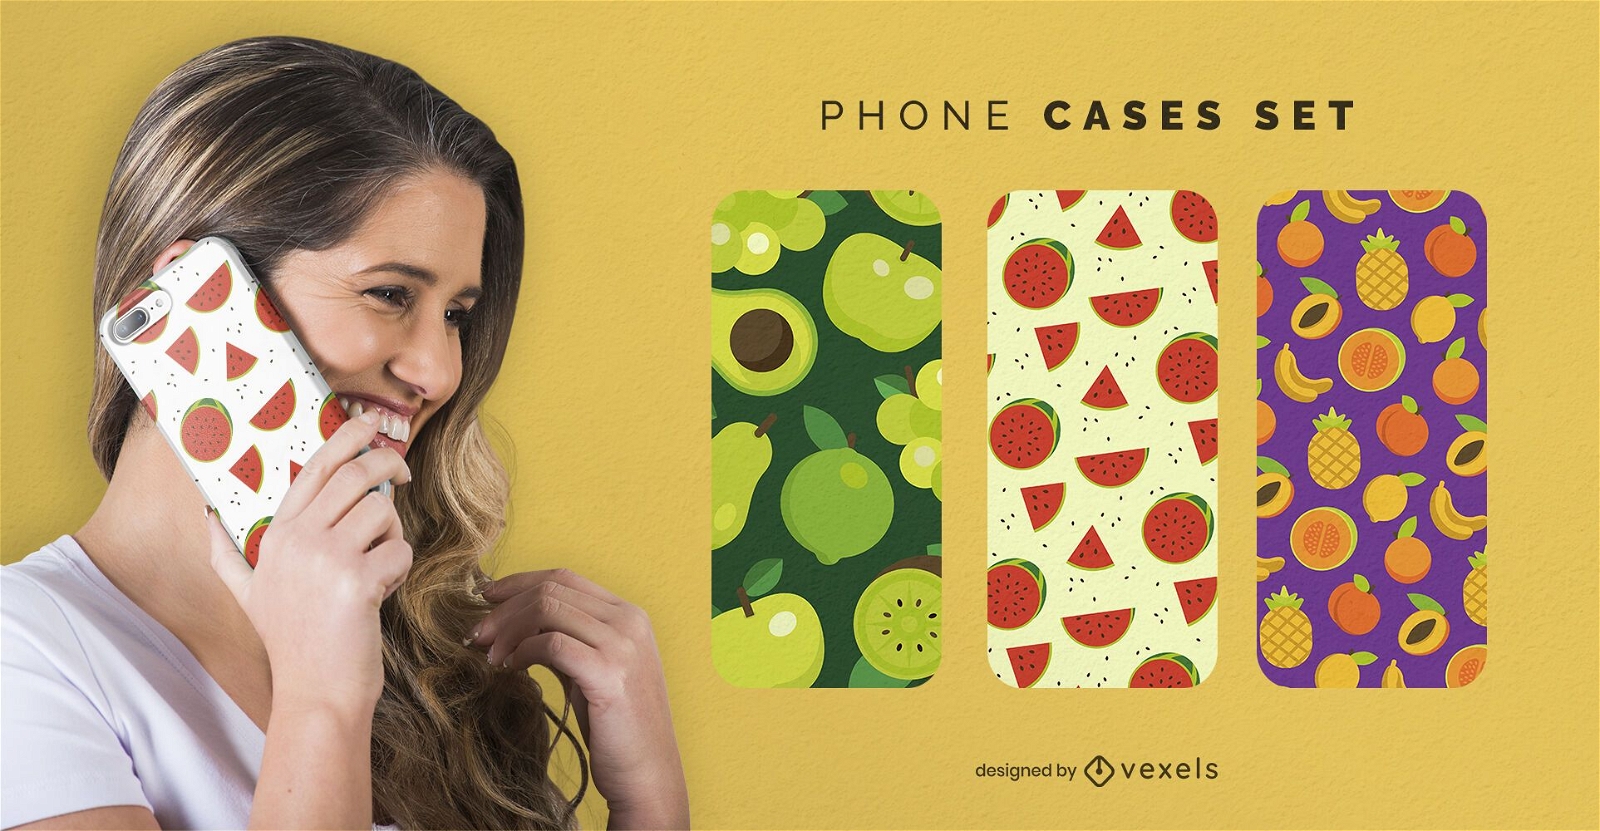 Fruits patterns phone cases set